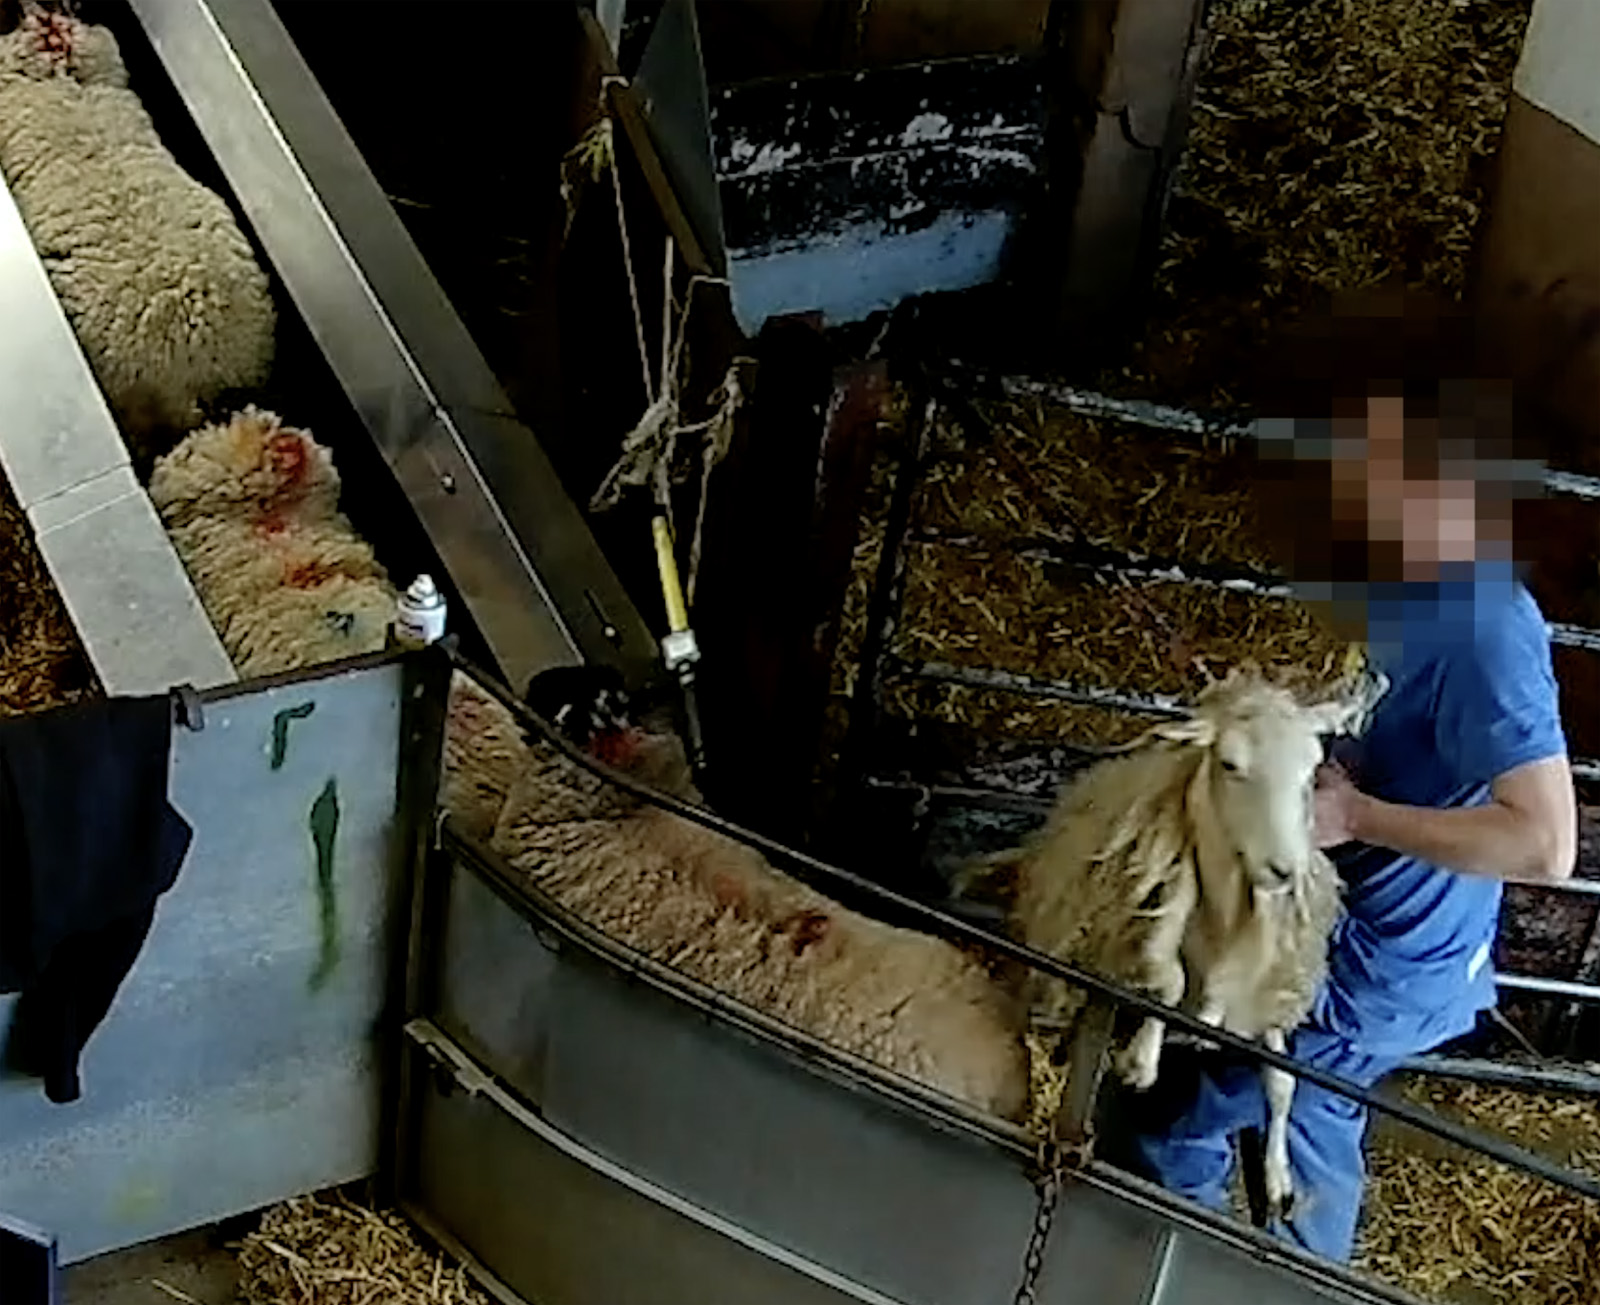 slaughterhouse worker roughly handles sheep